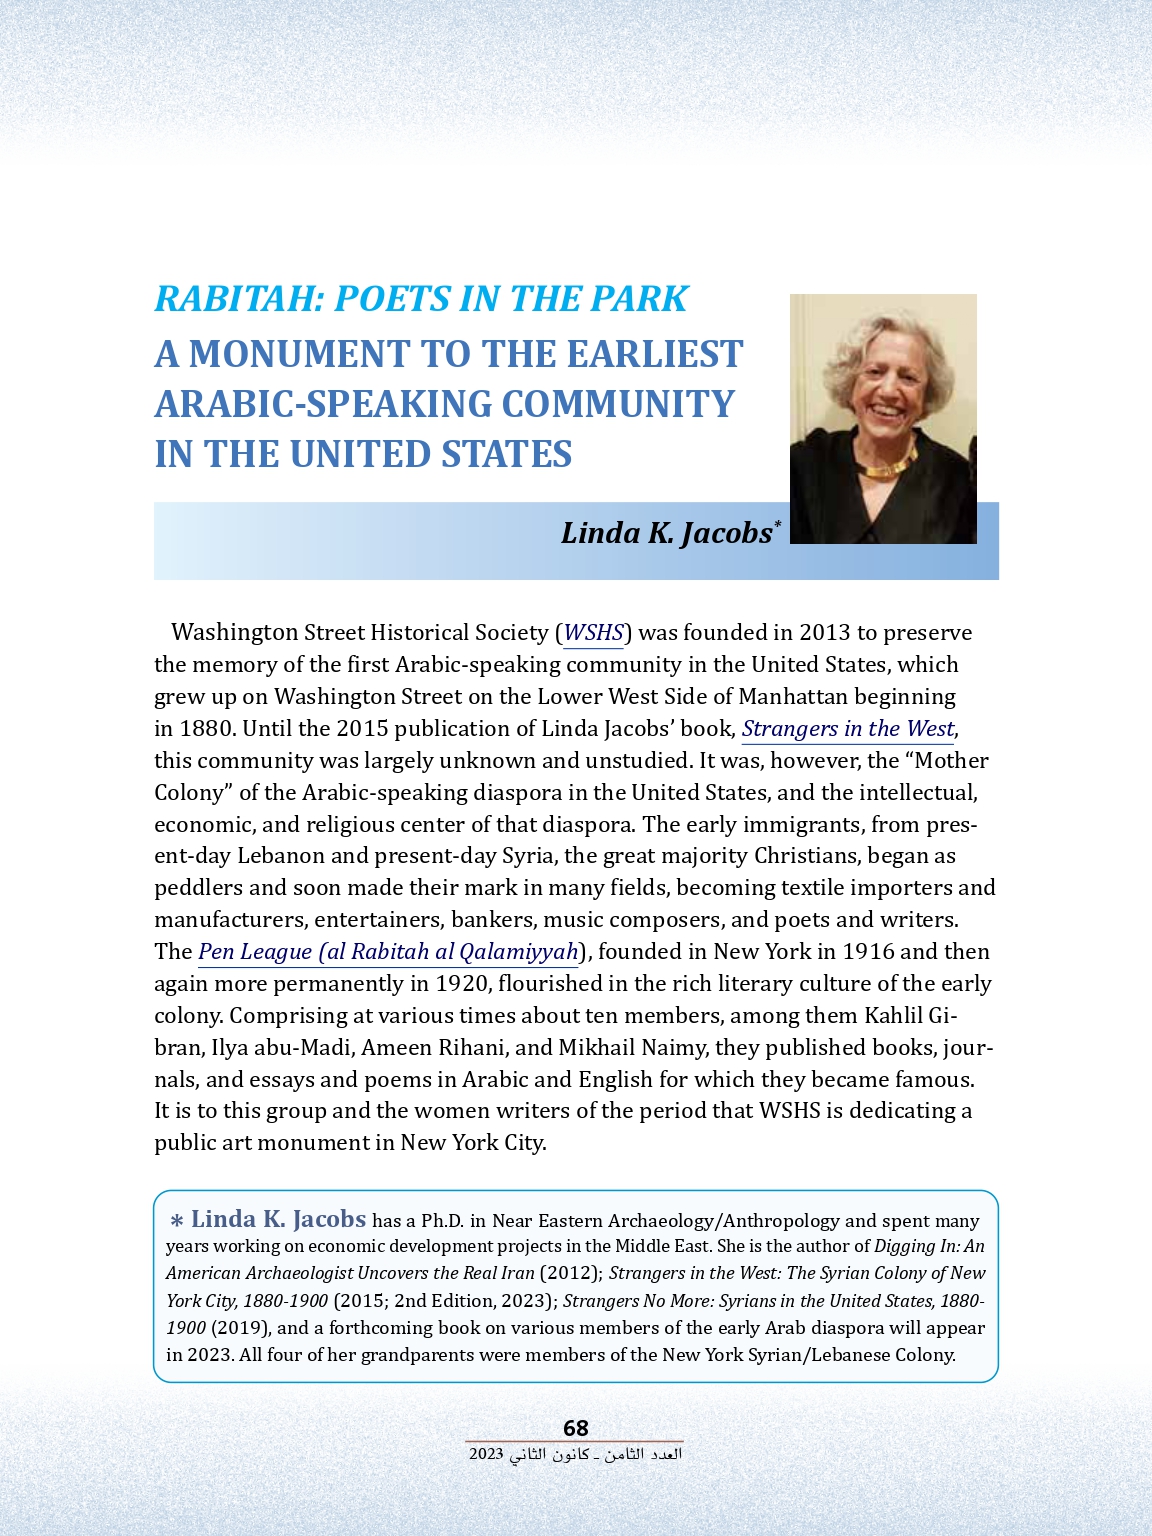 Linda K. Jacobs, "￼Rabitah: Poets in the Park", Aqlam, issue 8, January 2023, pp. 68-69.